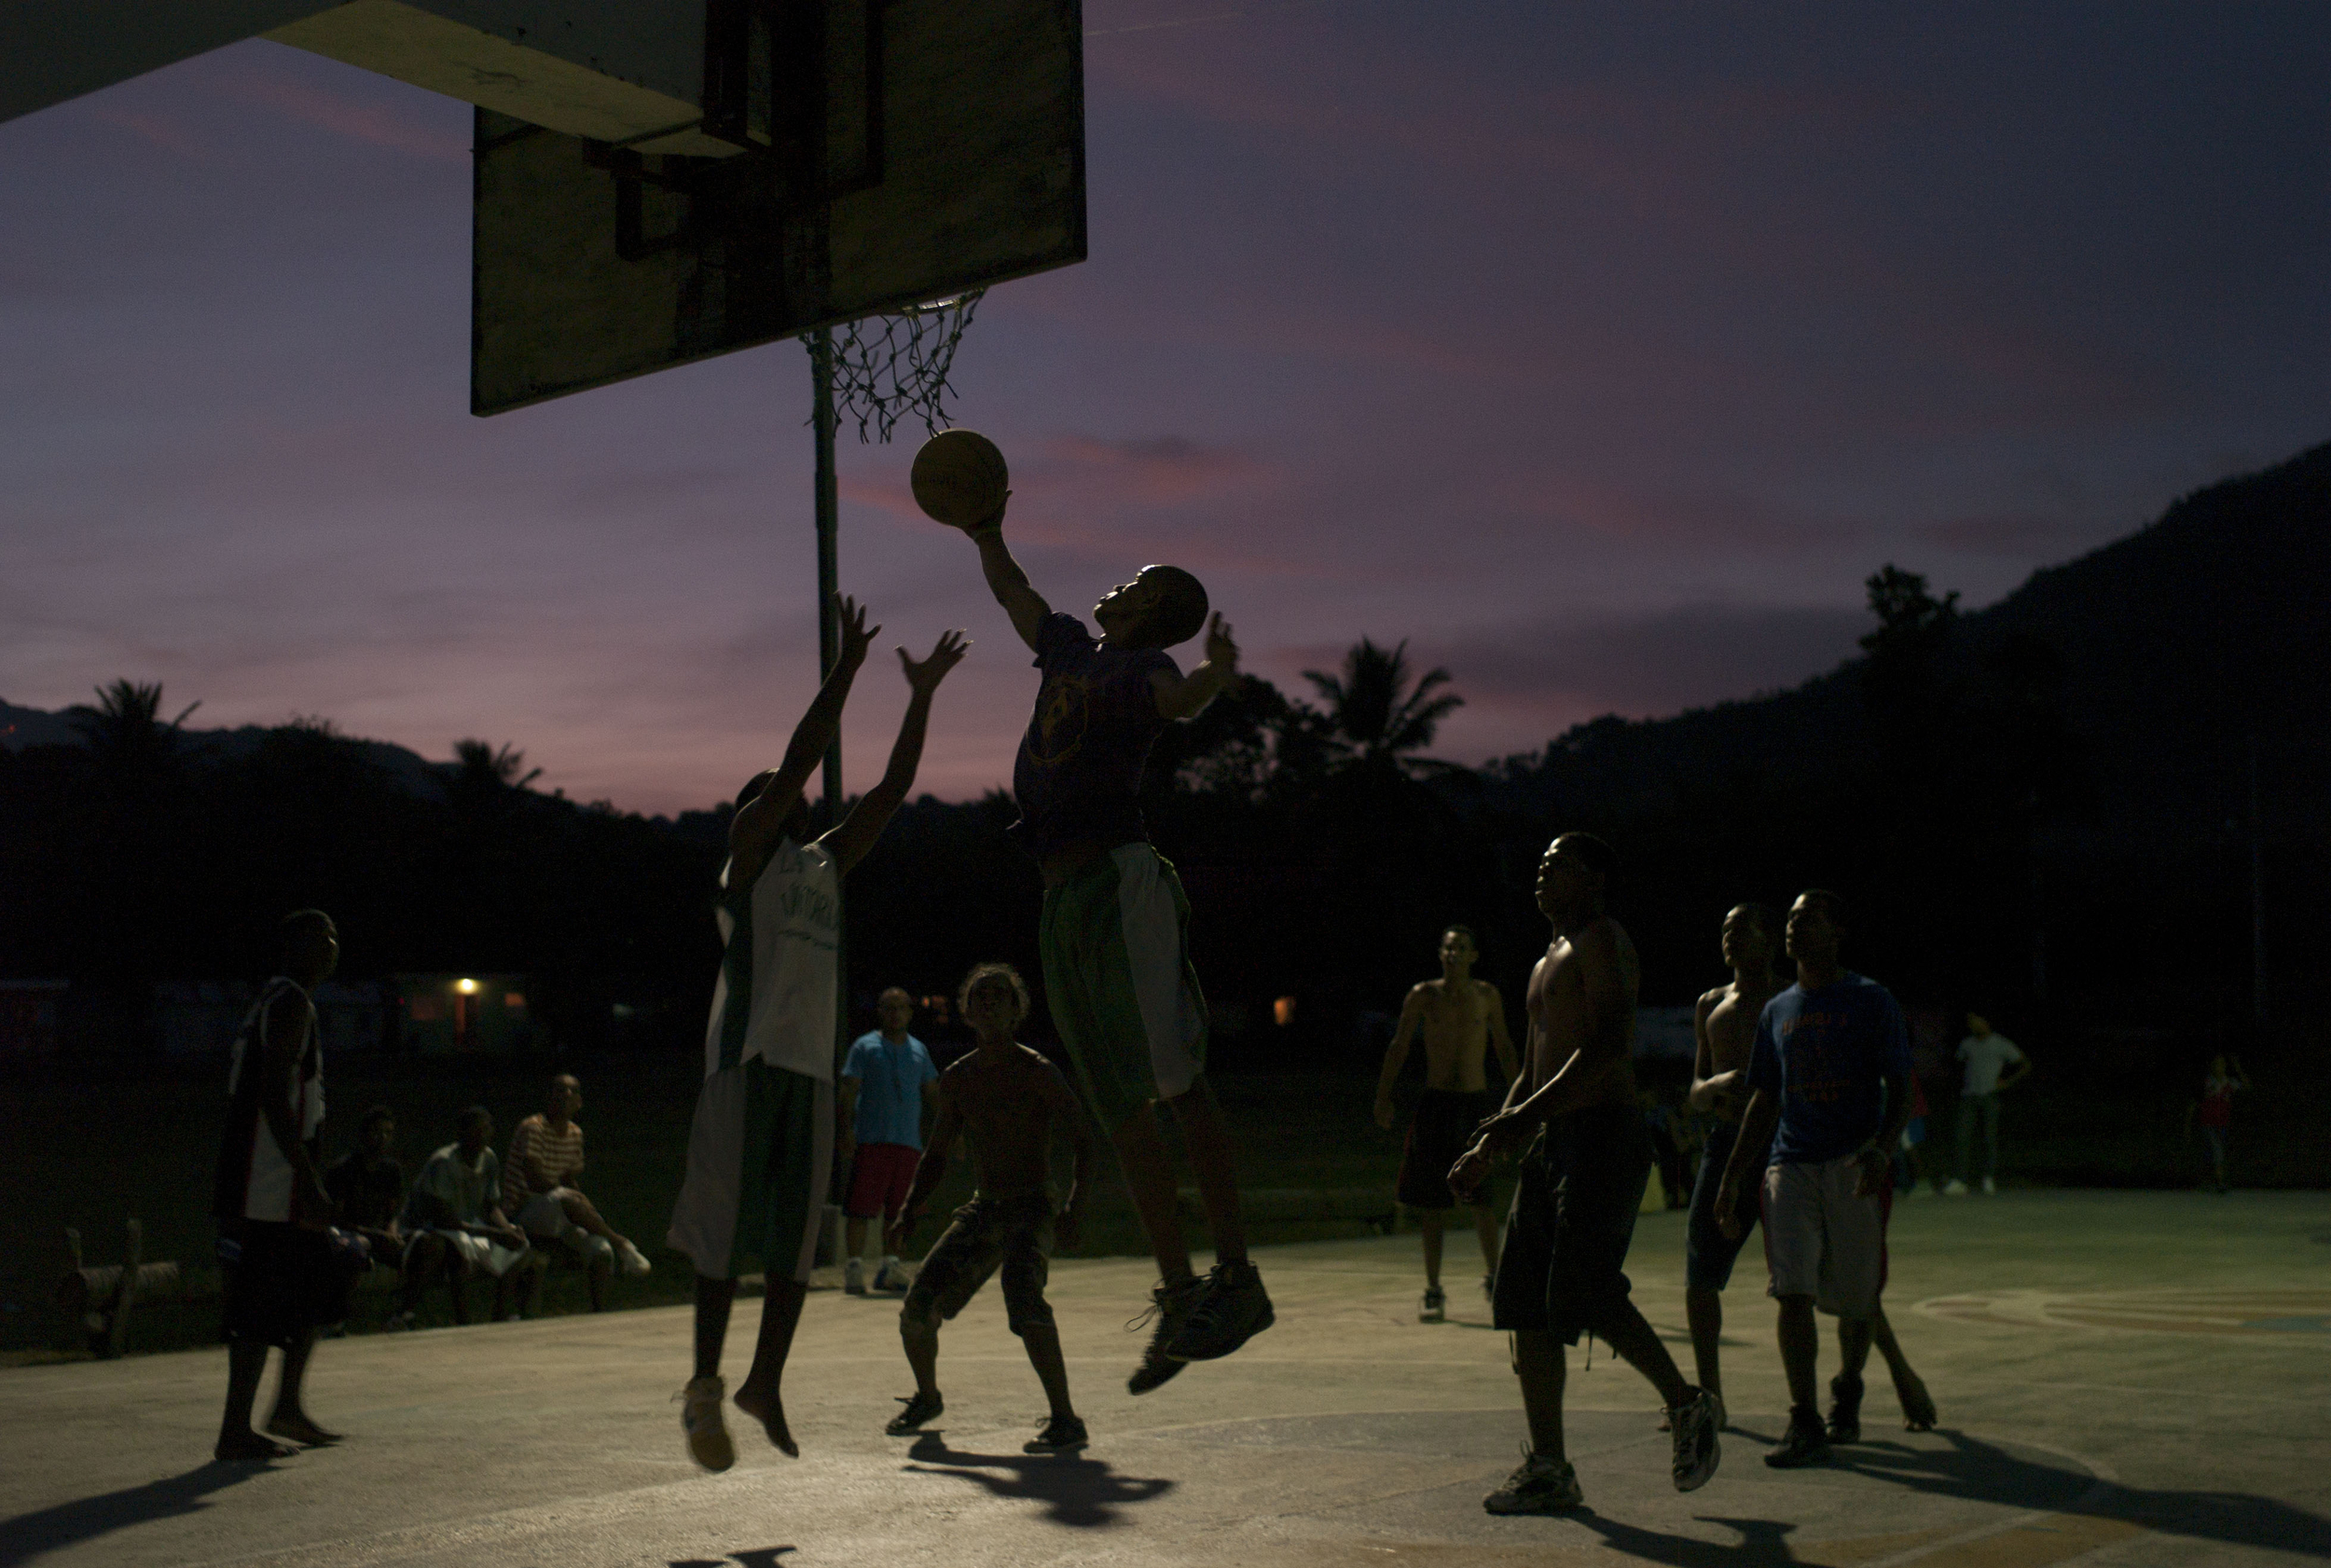  Pickup basketball,&nbsp; araiso, Dominican Republic.  